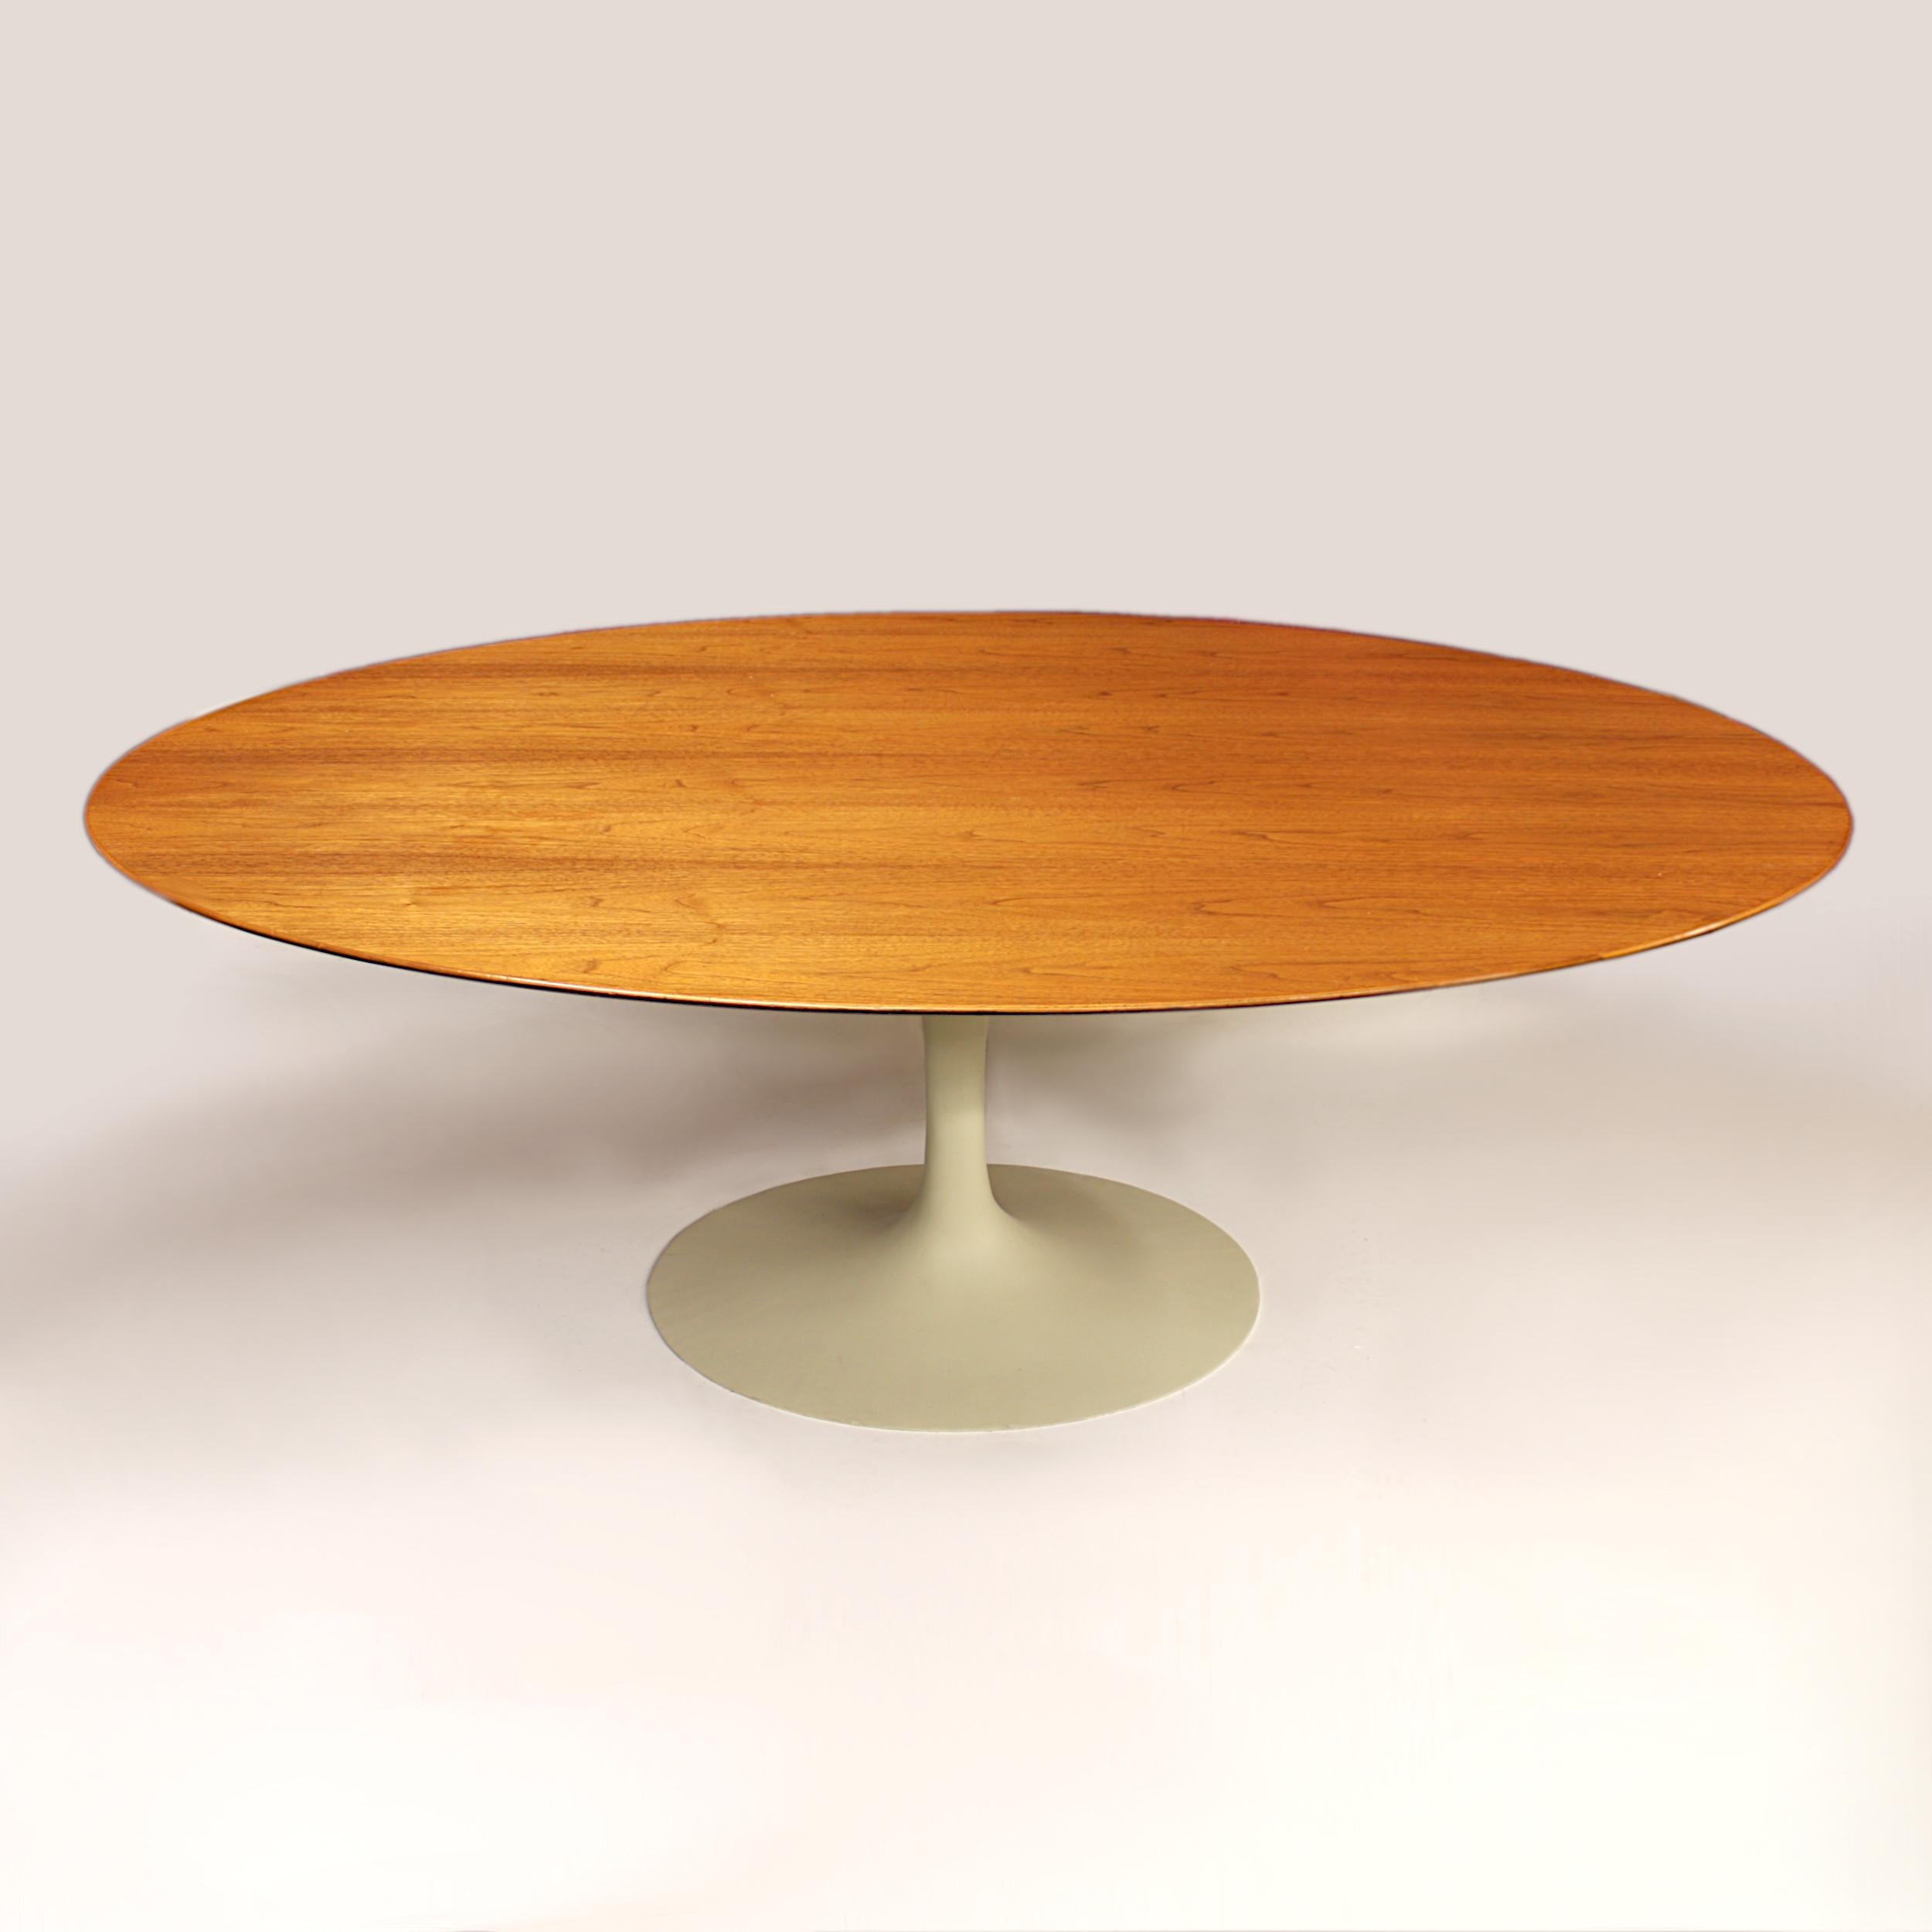 Mid-Century Modern Original 1970 Oval Walnut Top Tulip Dining Table by Eero Saarinen for Knoll